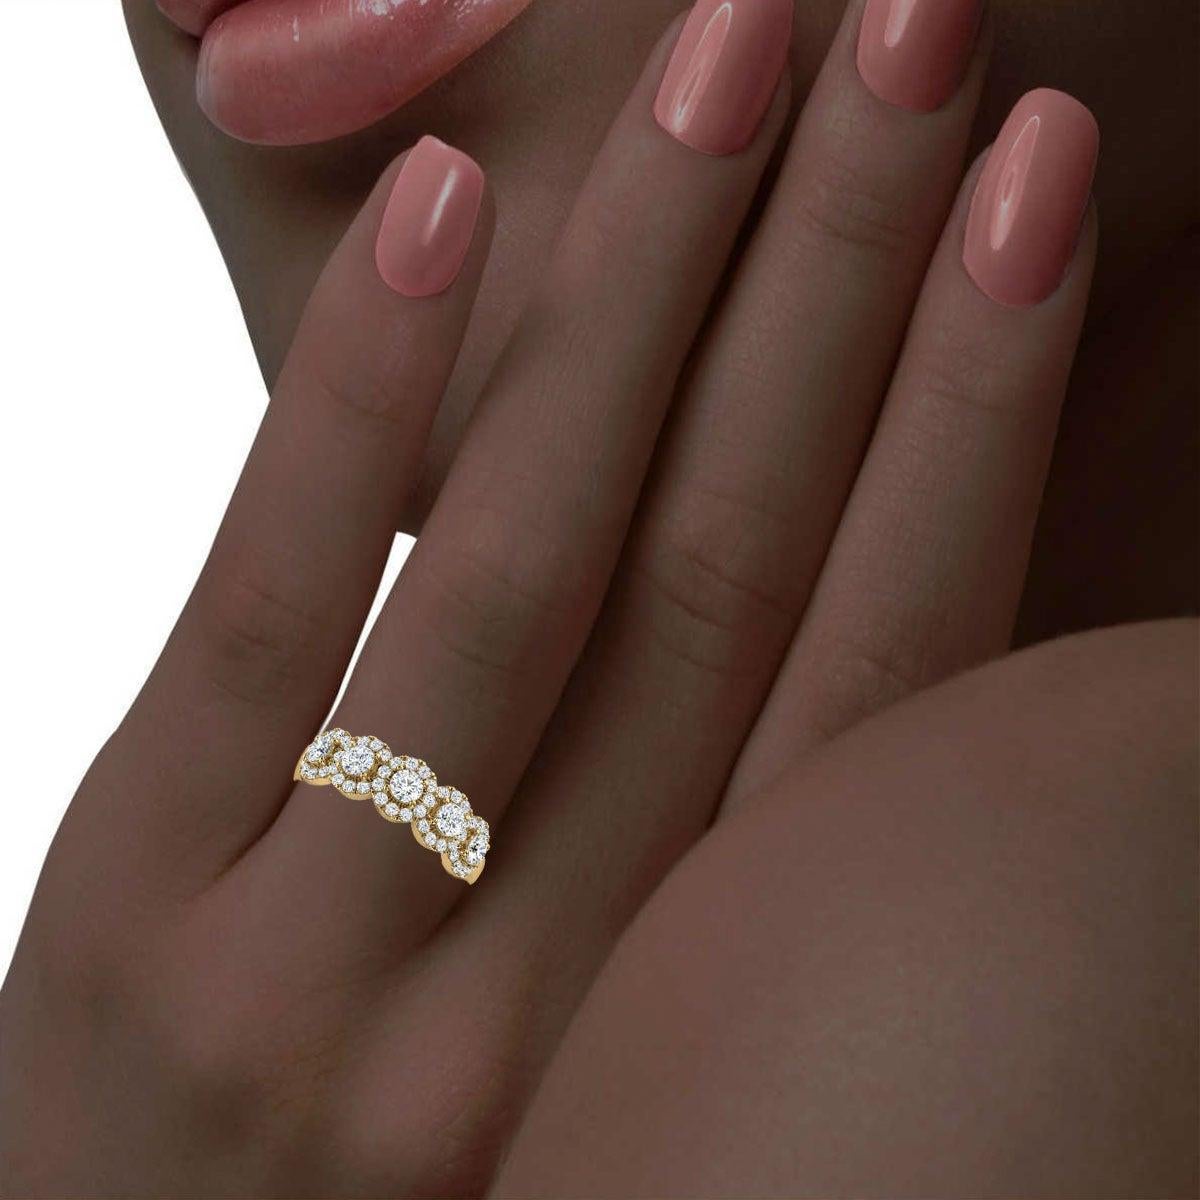 For Sale:  14k Yellow Gold Petite Jenna Halo Diamond Ring '1/2 Ct. Tw' 4